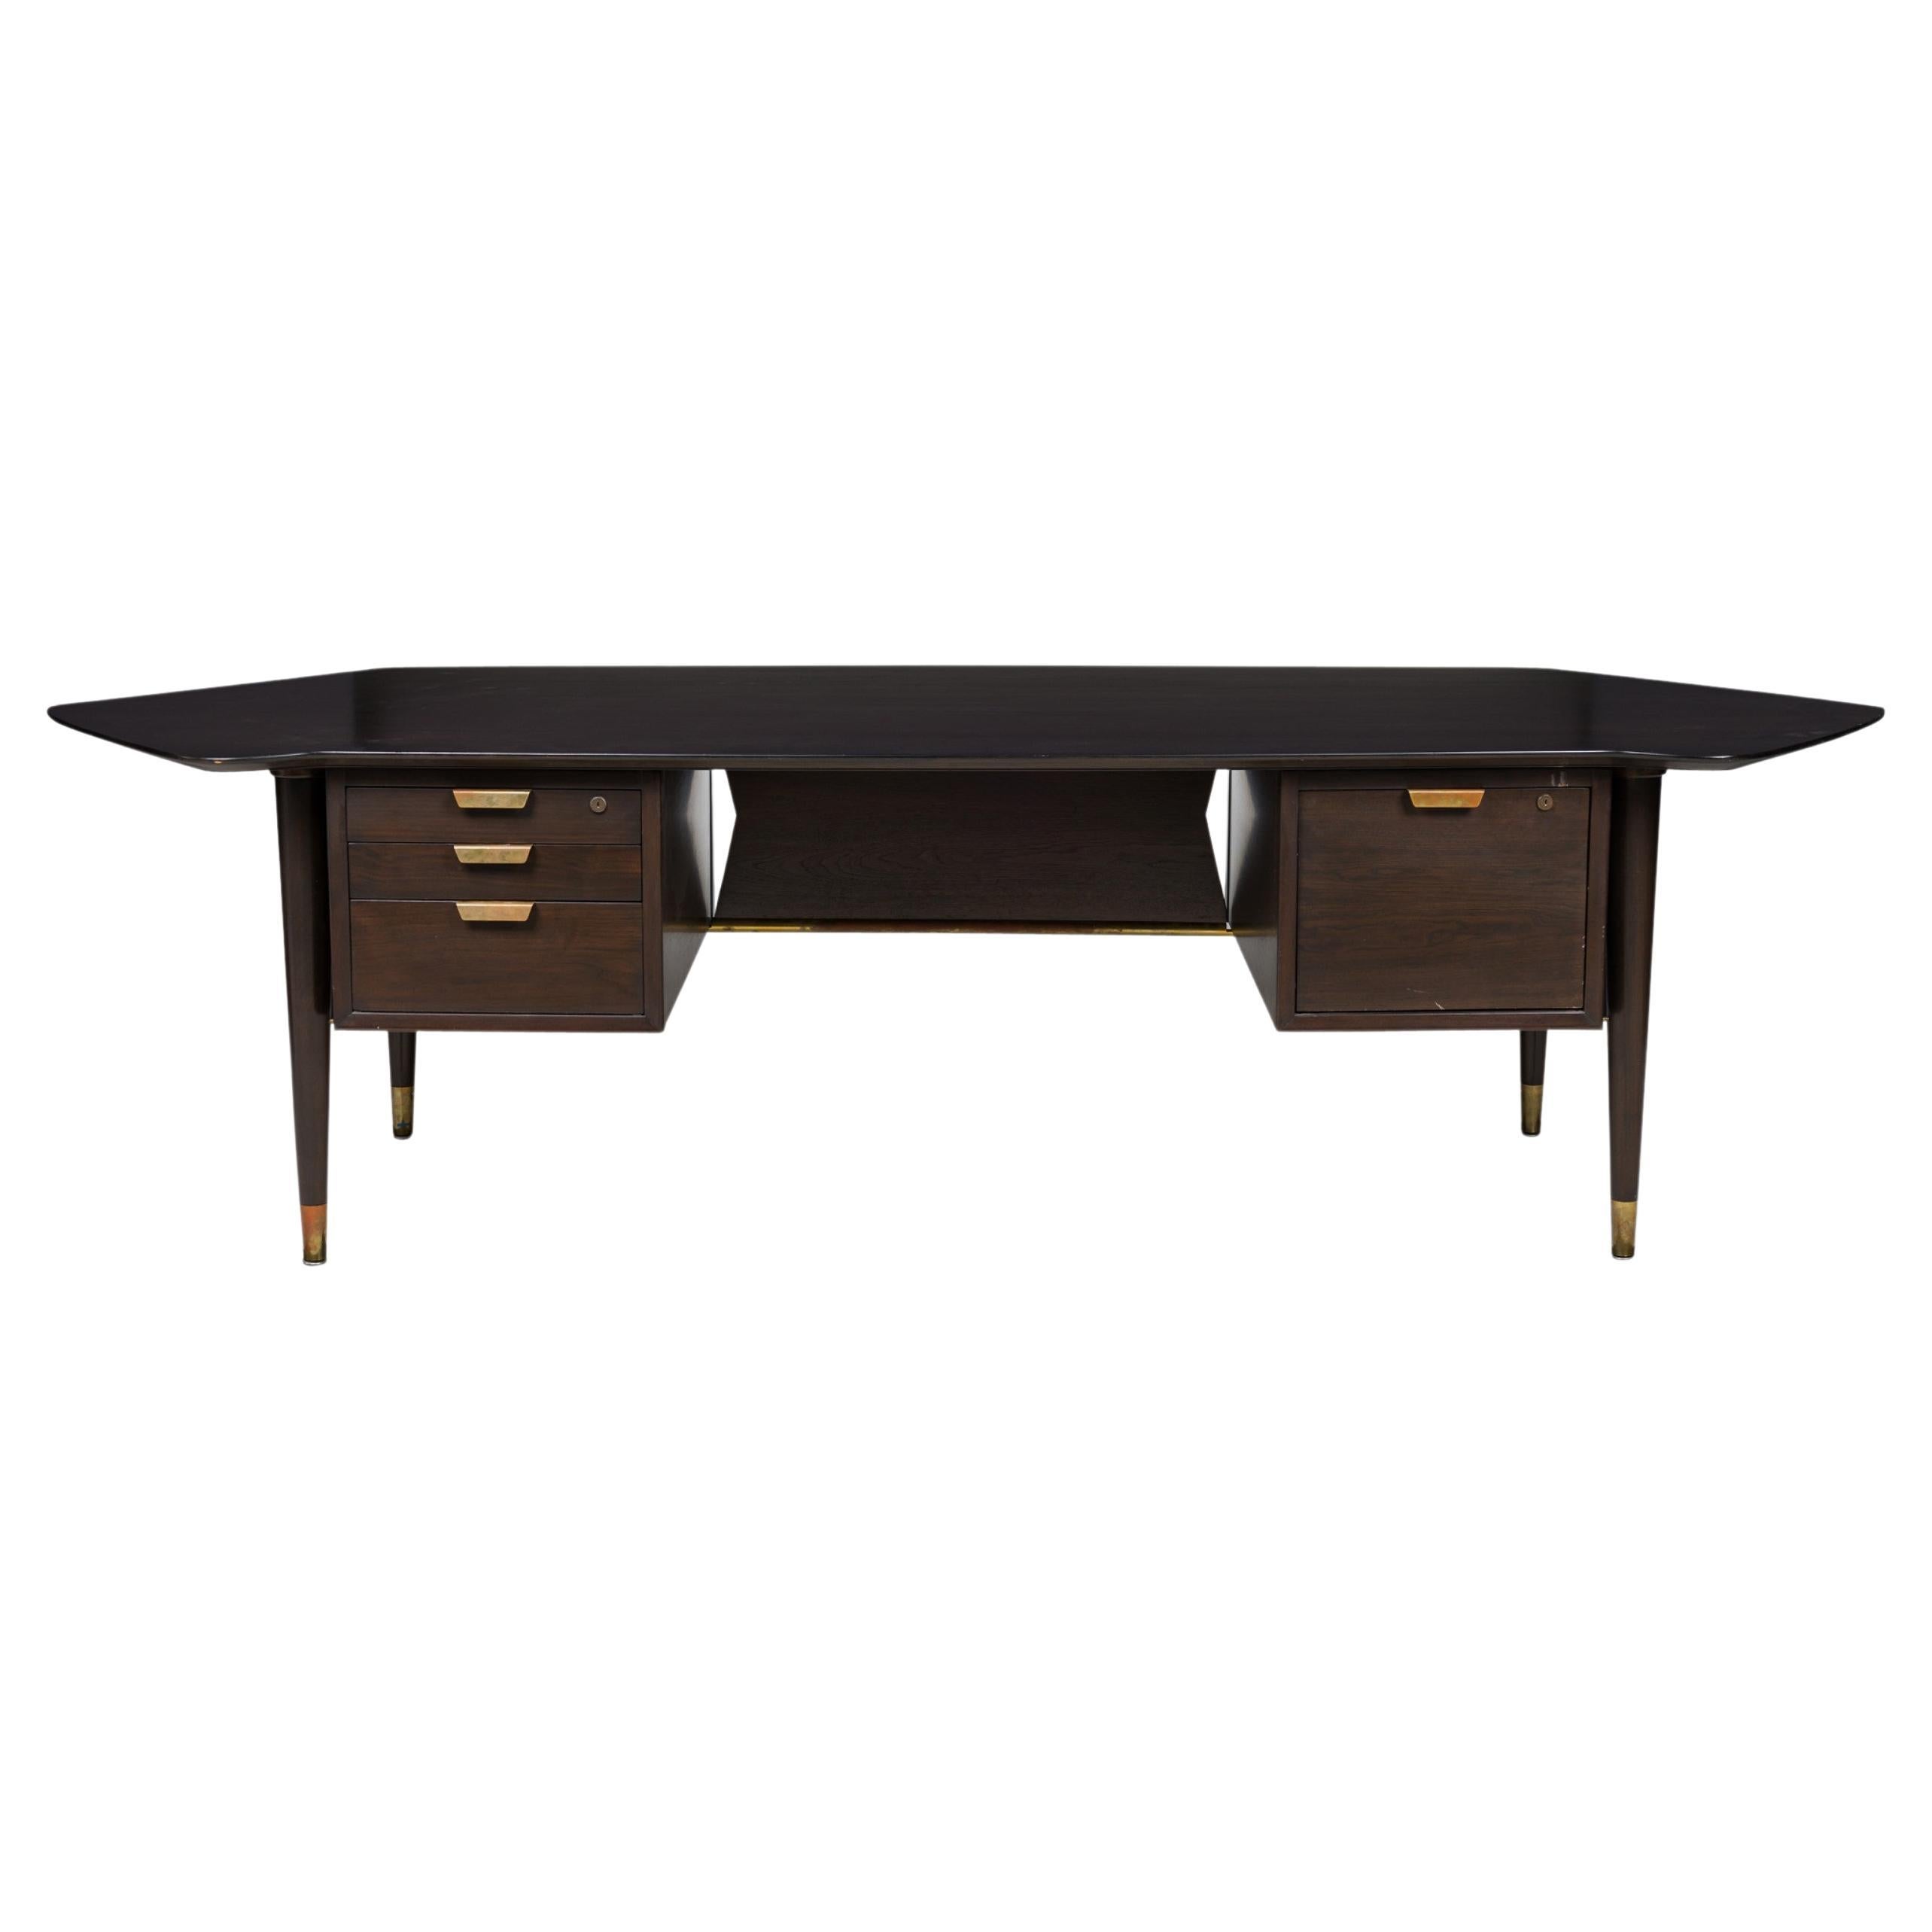 Standard Furniture Co. American Dark Wood Veneer & Brass Executive Desk